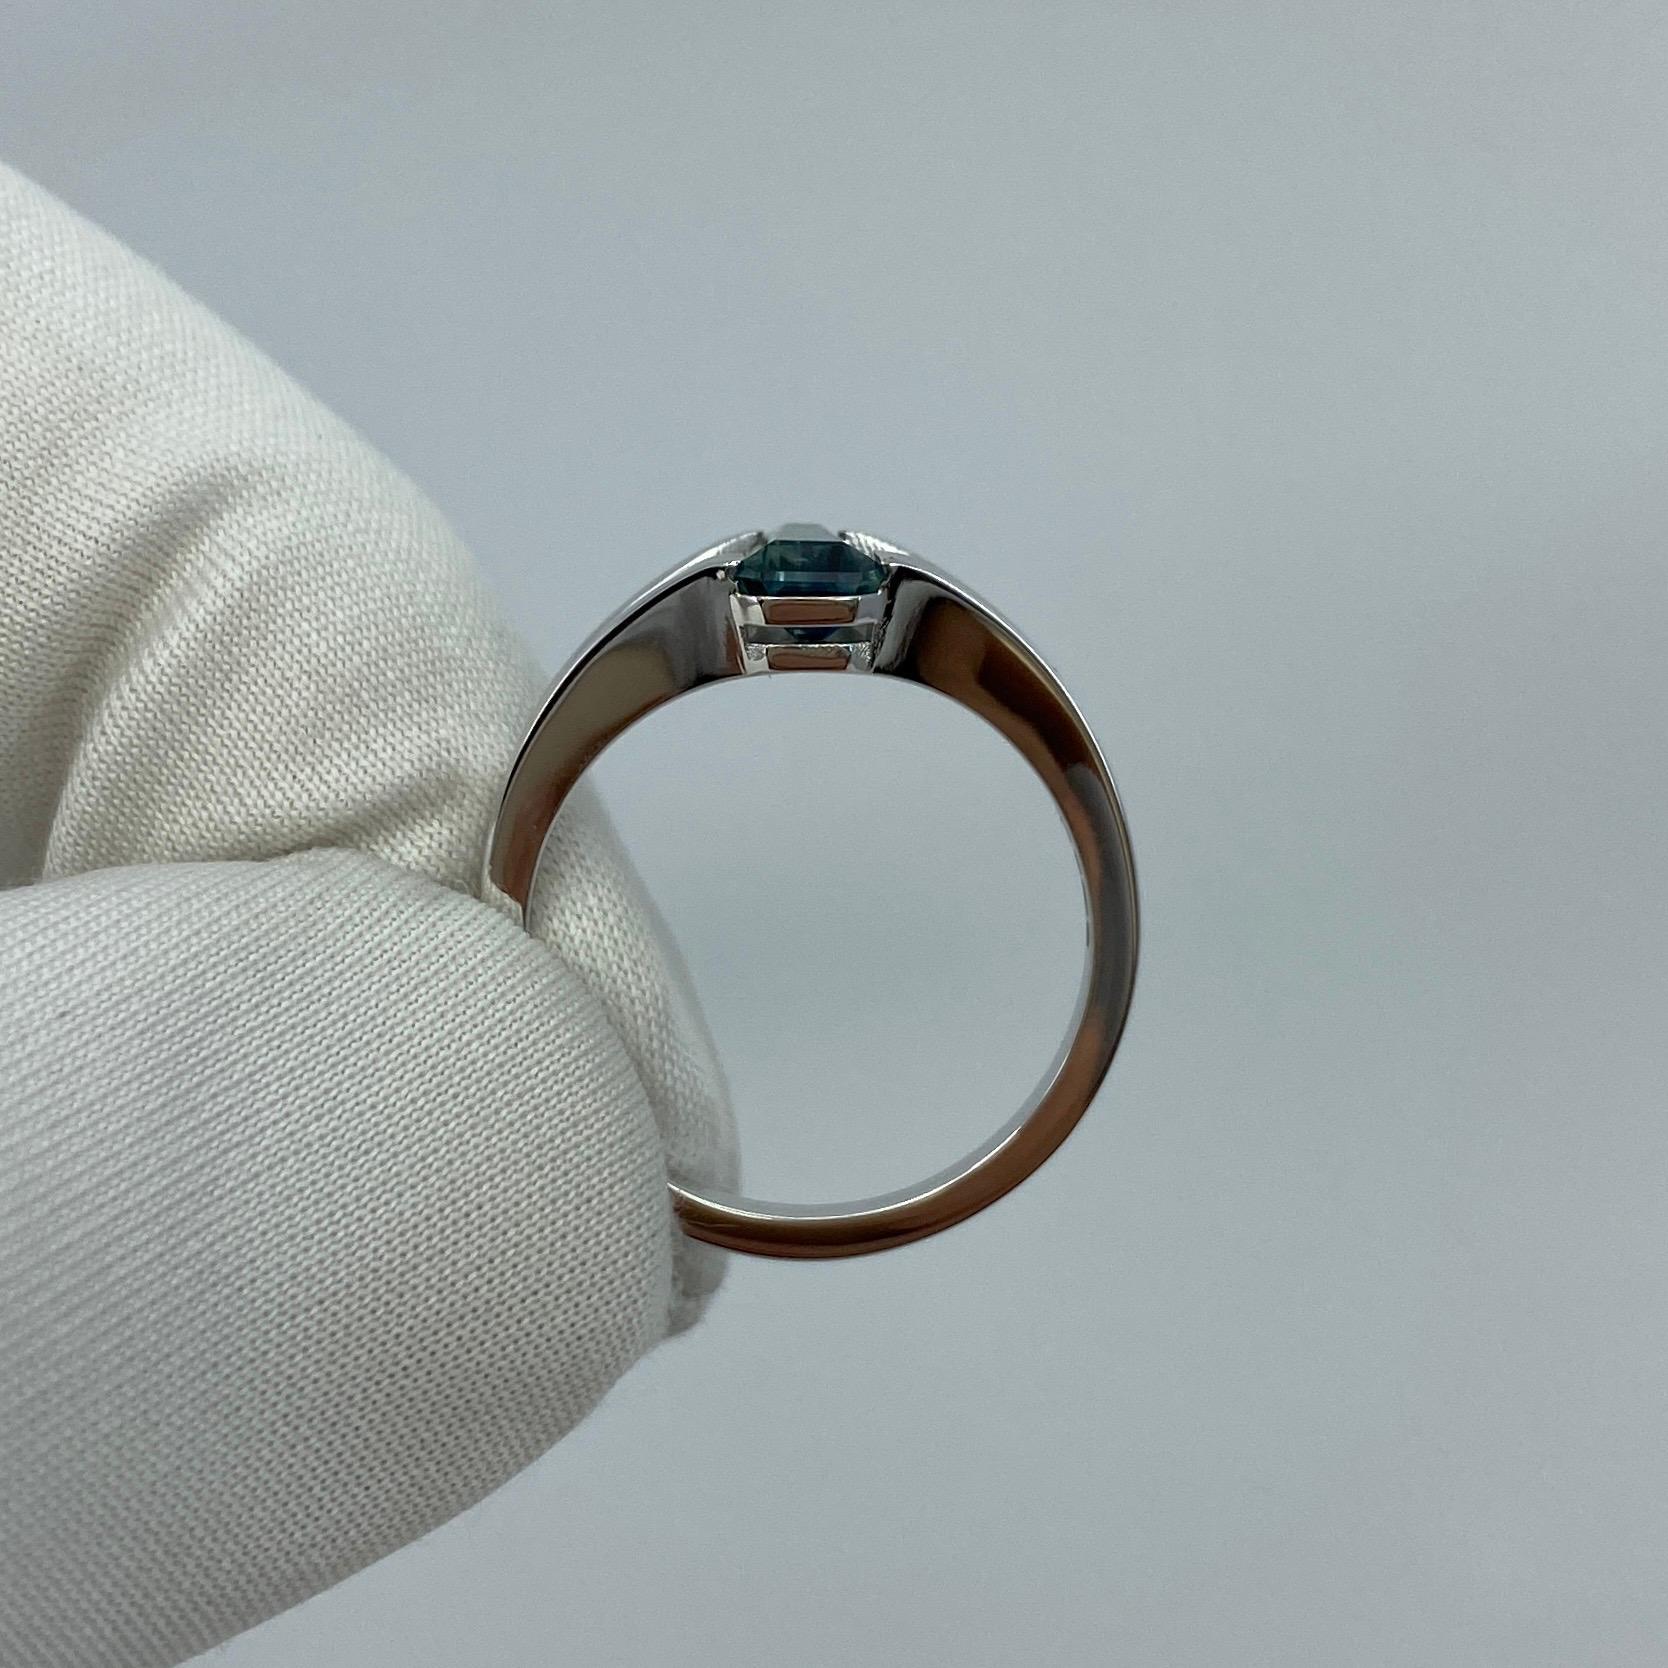 ITSIT Bi Colour Green Blue Australian Sapphire Fancy Cut 18k White Gold Ring 6